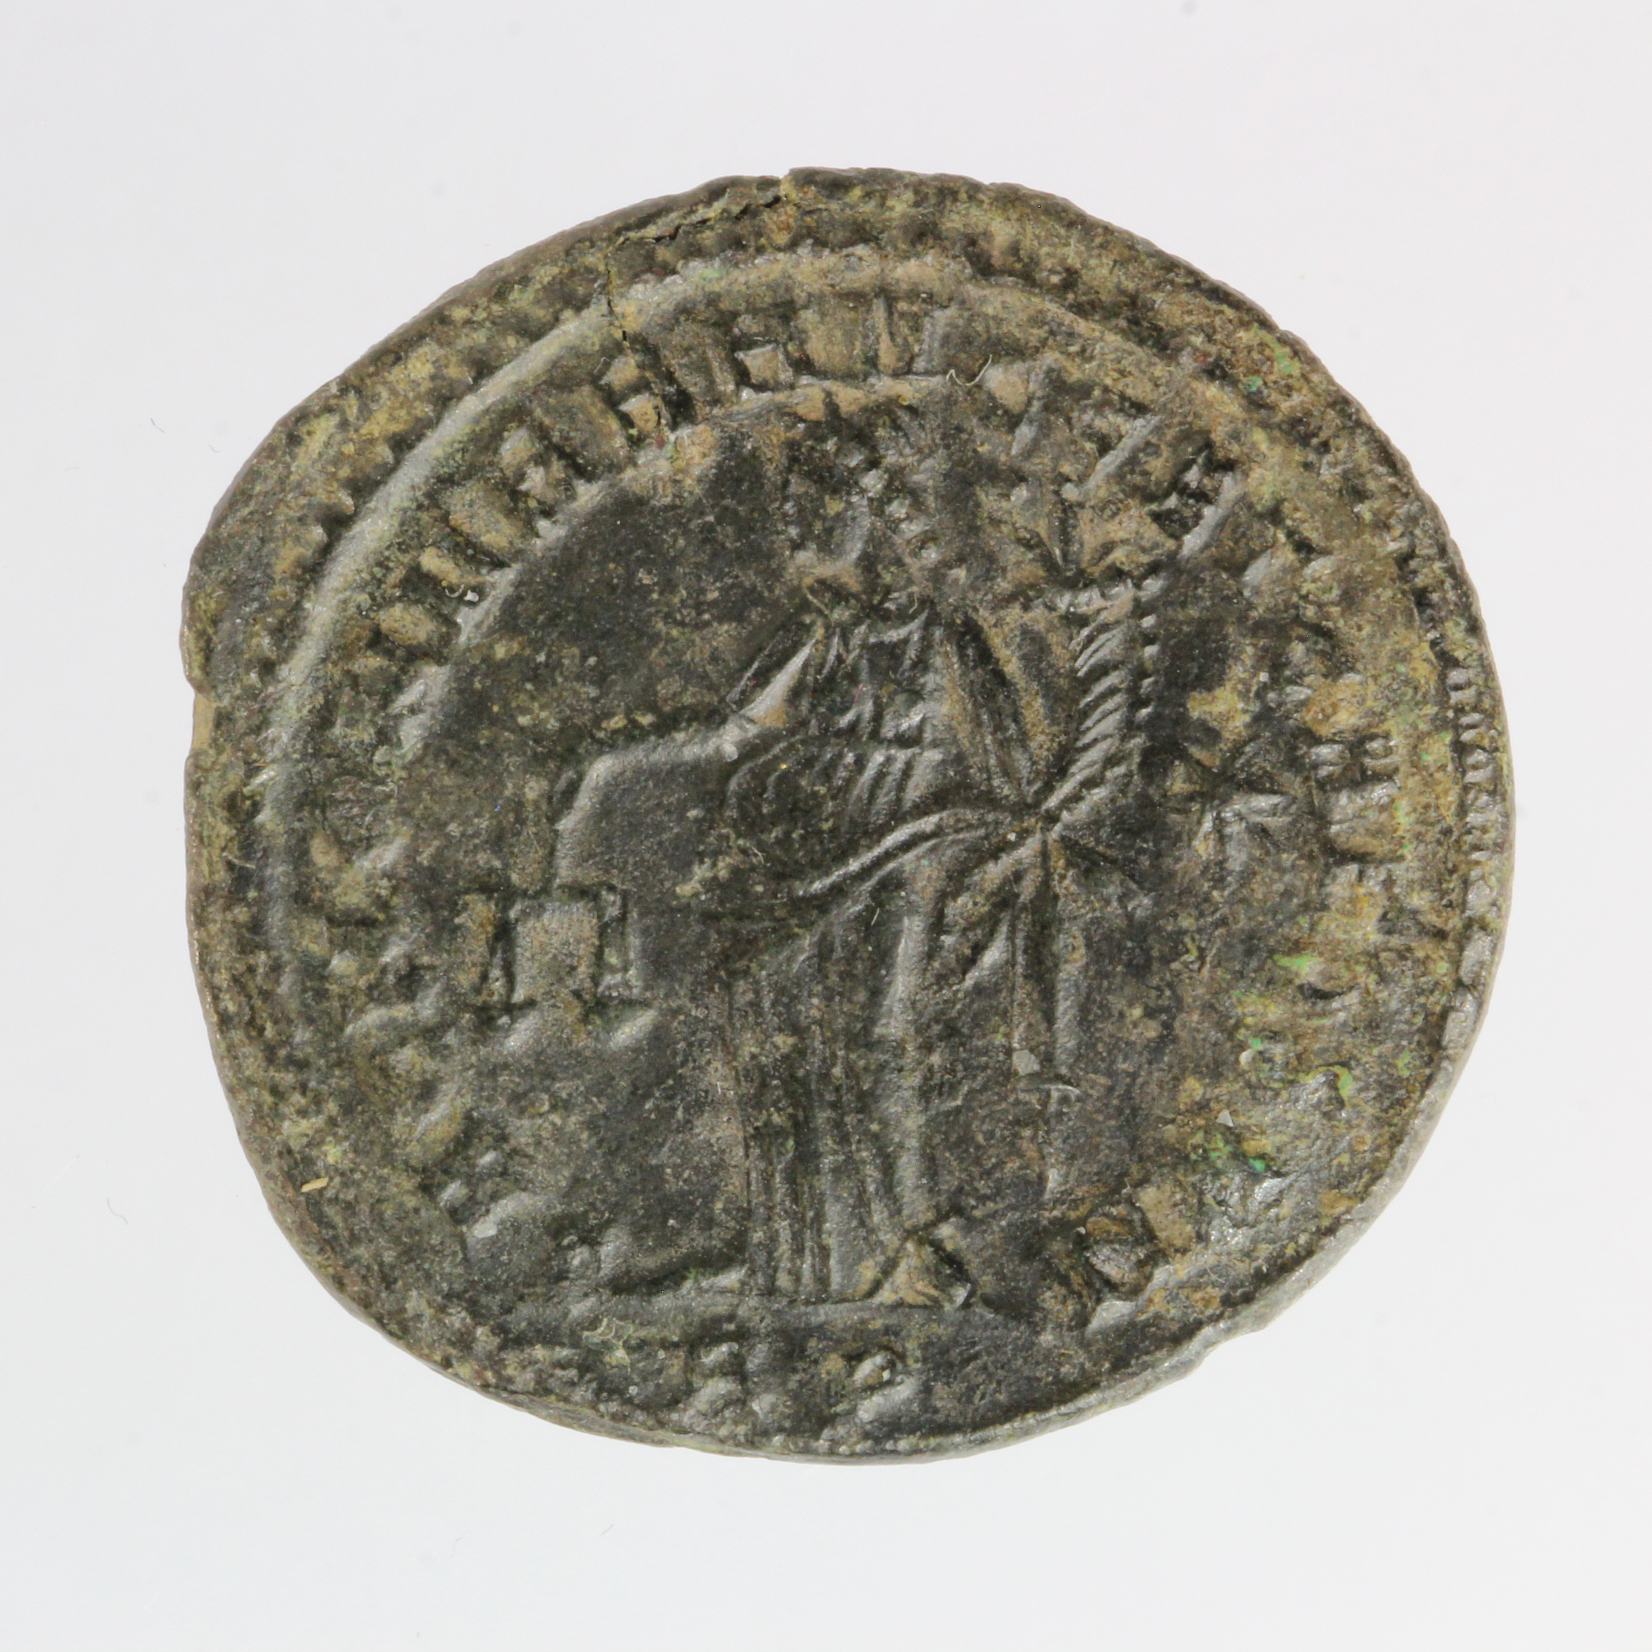 Diocletian billon follis, Rome Mint 302-305 A.D., obverse:- Laureate bust right, reverse reads:- SAC - Image 2 of 2